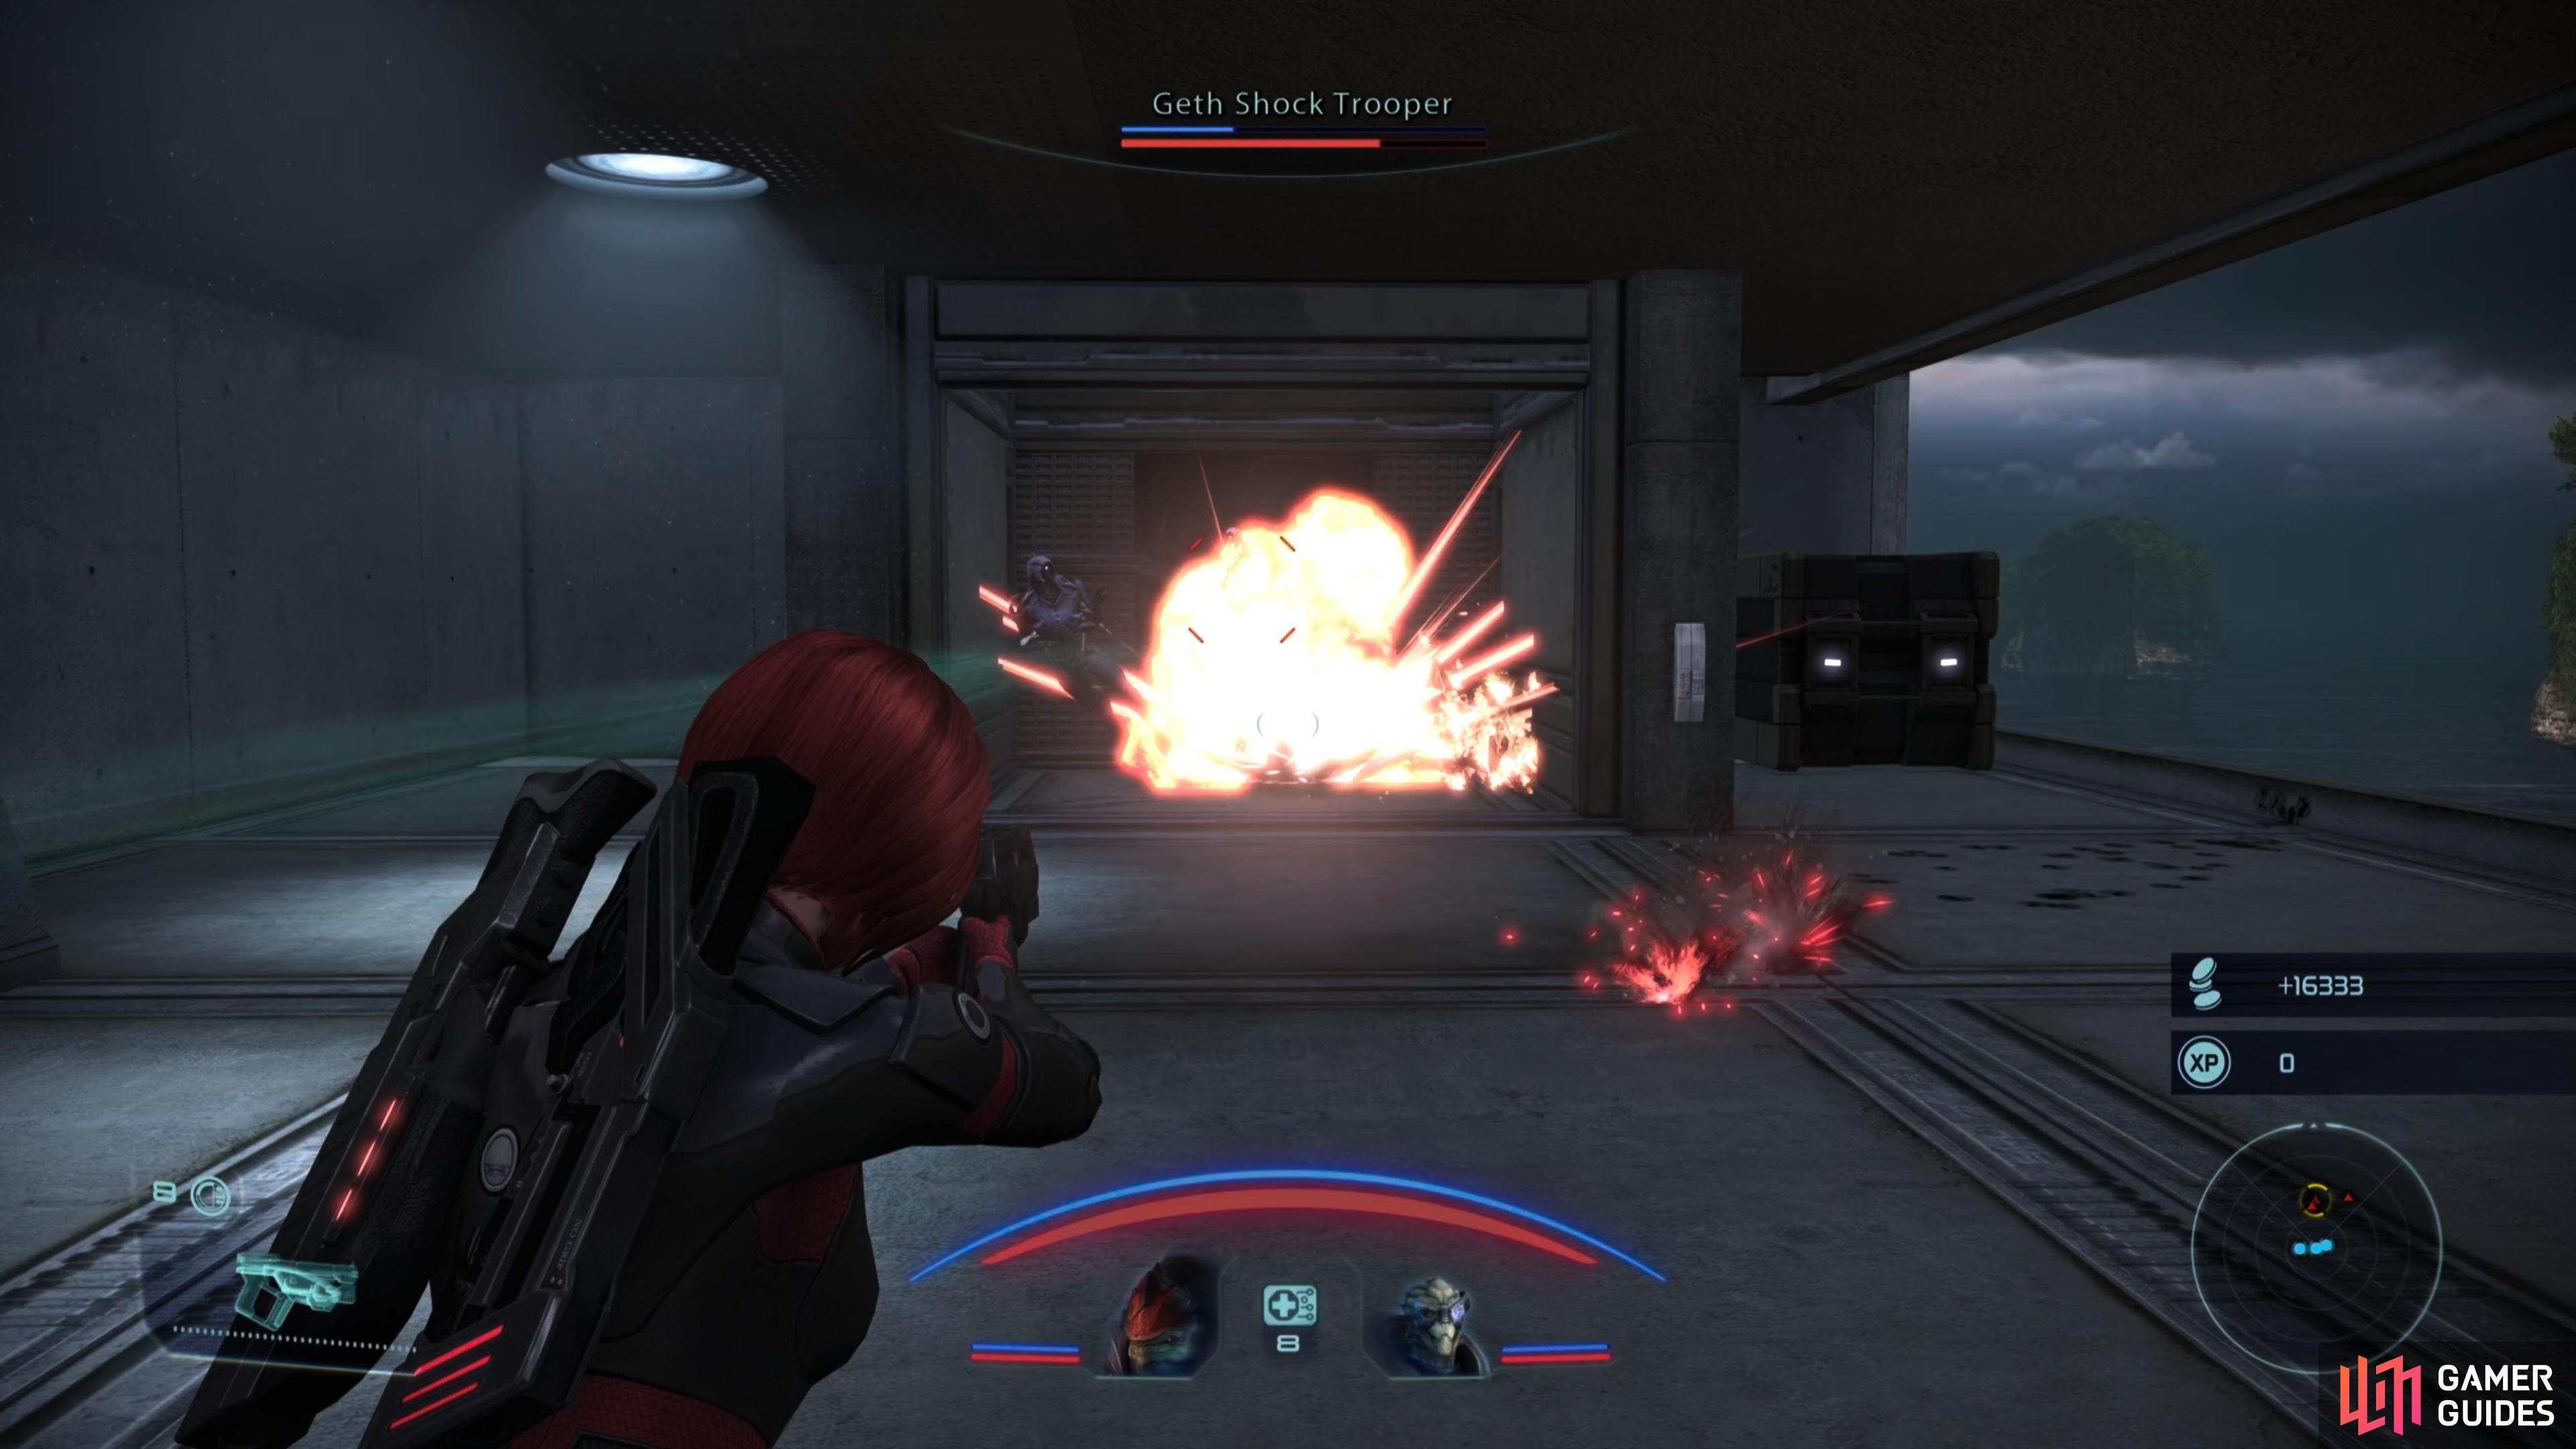 After deactivating the turret, chuck a grenade at some geth arriving via elevator.